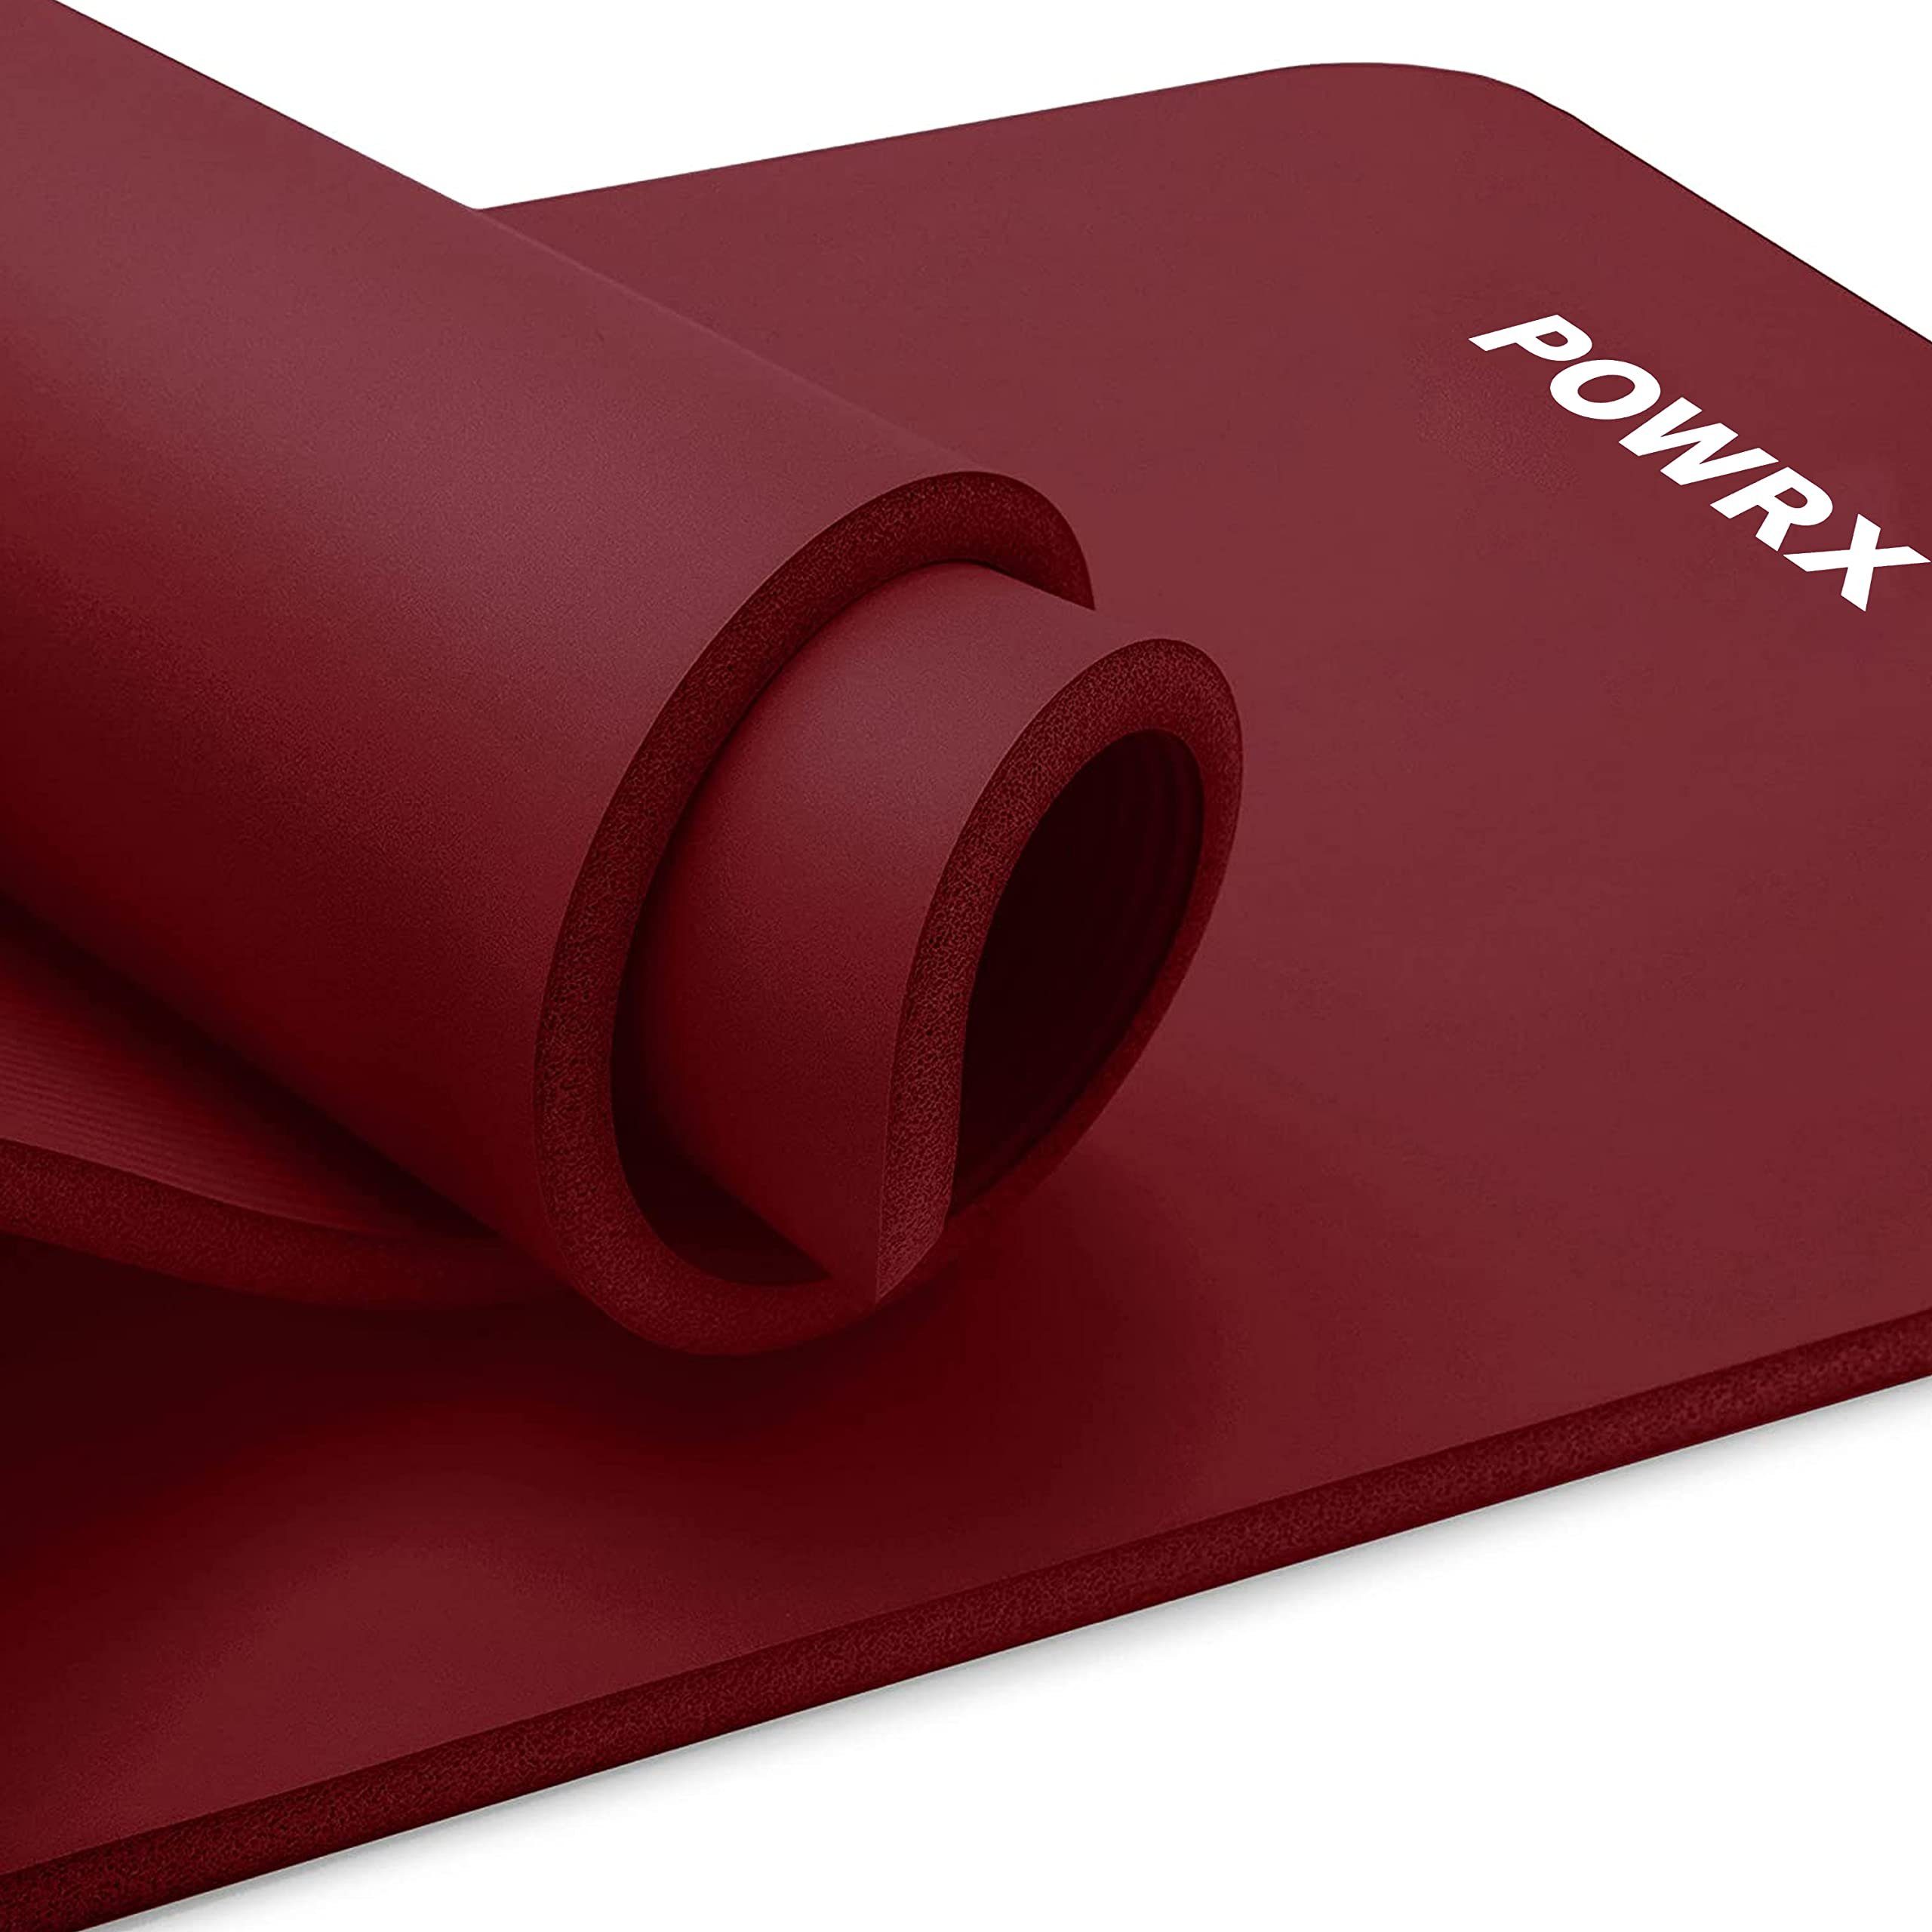 POWRX Yogamatte Gymnastik- & Yogamatte (Weinrot, 190x60x1.5cm) -  Hautfreundl., Weinrot 190 X 60 X 1.5 Cm Nitril-Butadien-Kautschuk